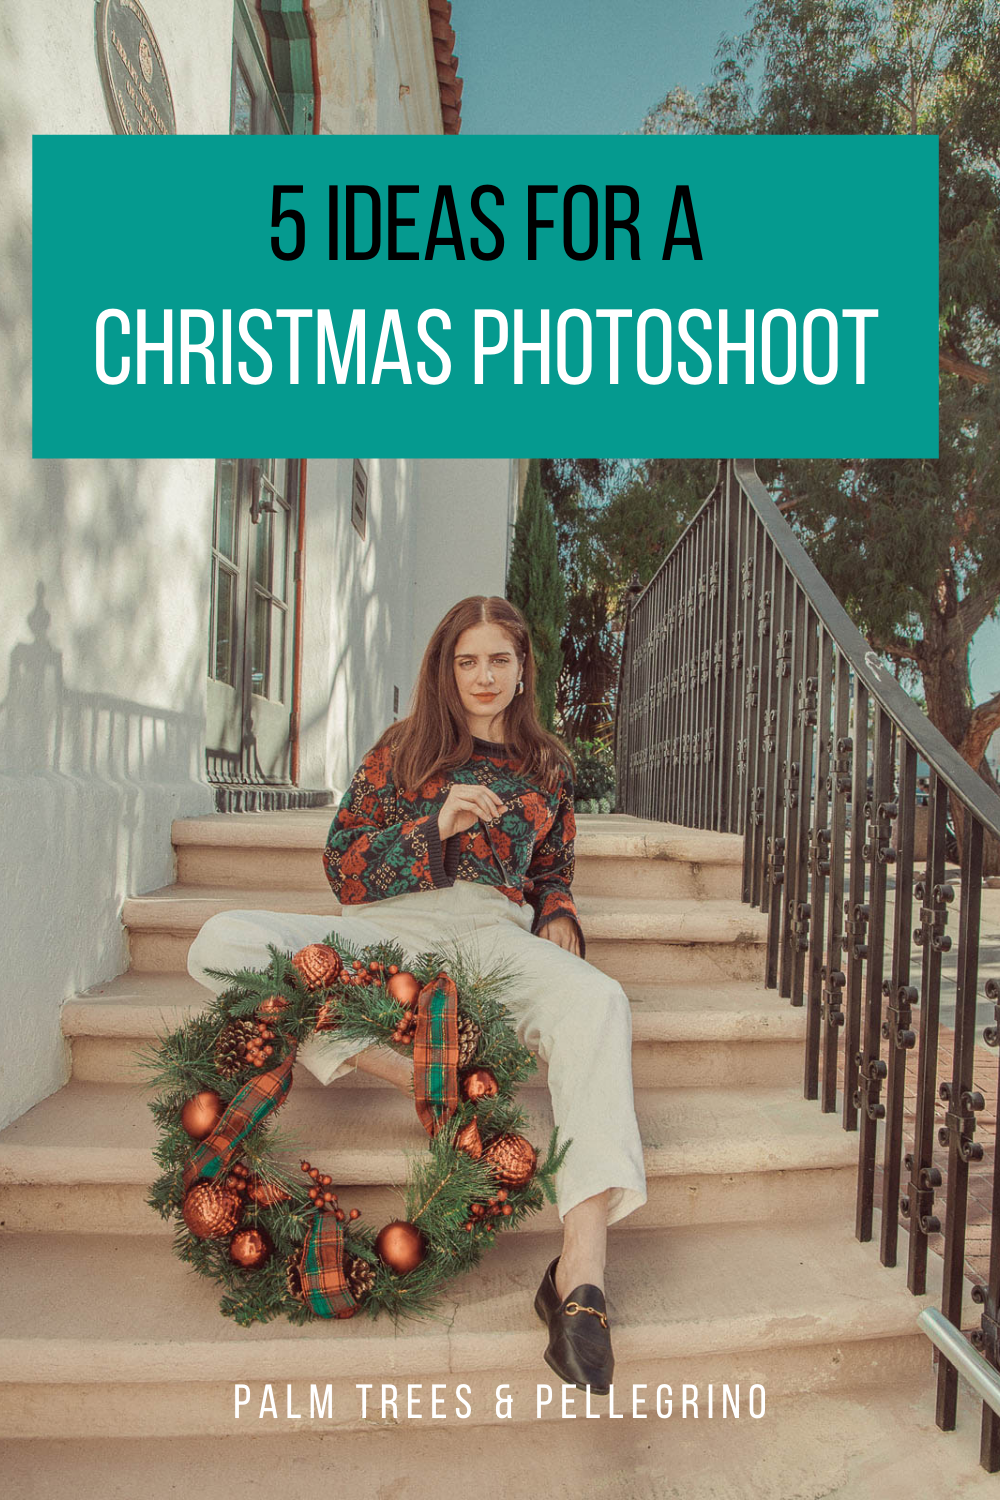 5 Creative Christmas Photoshoot Ideas to Try This Season